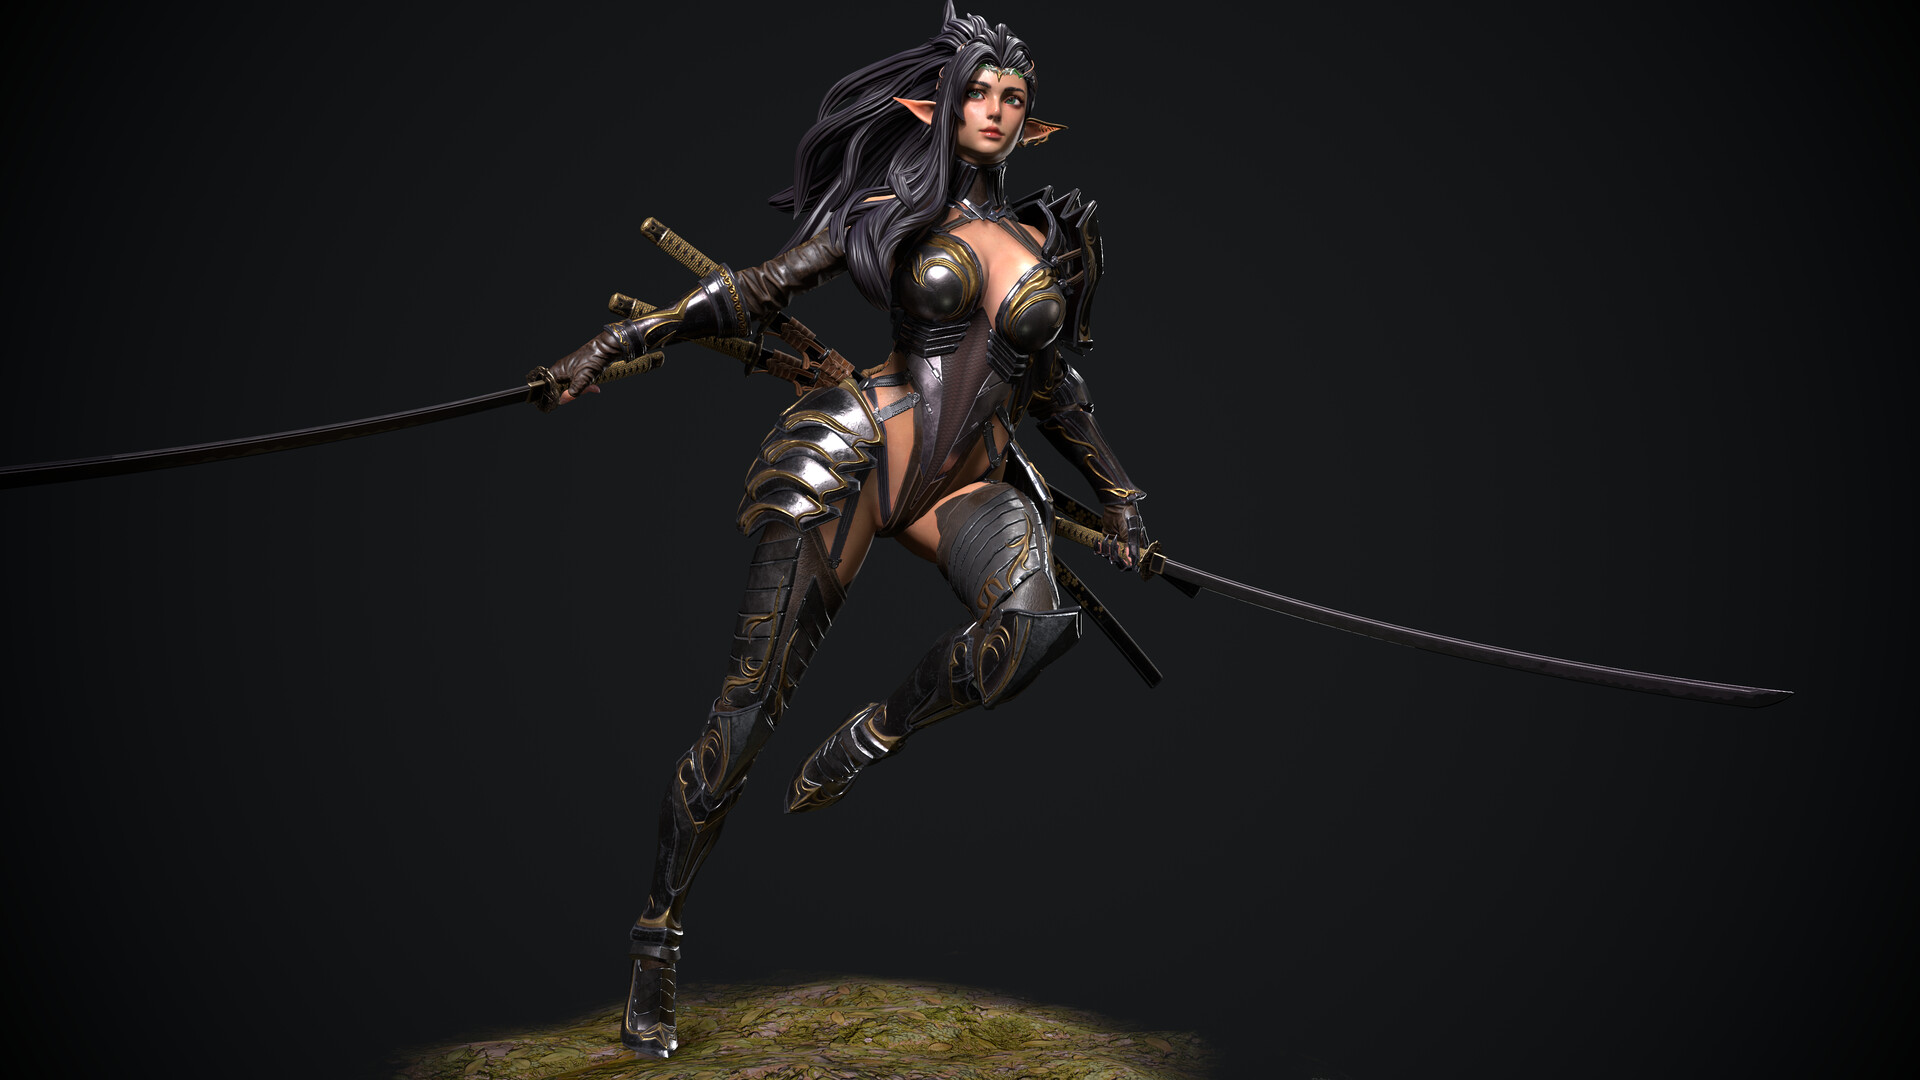 General 1920x1080 CGI digital art women fantasy art fantasy girl pointy ears women with swords armor